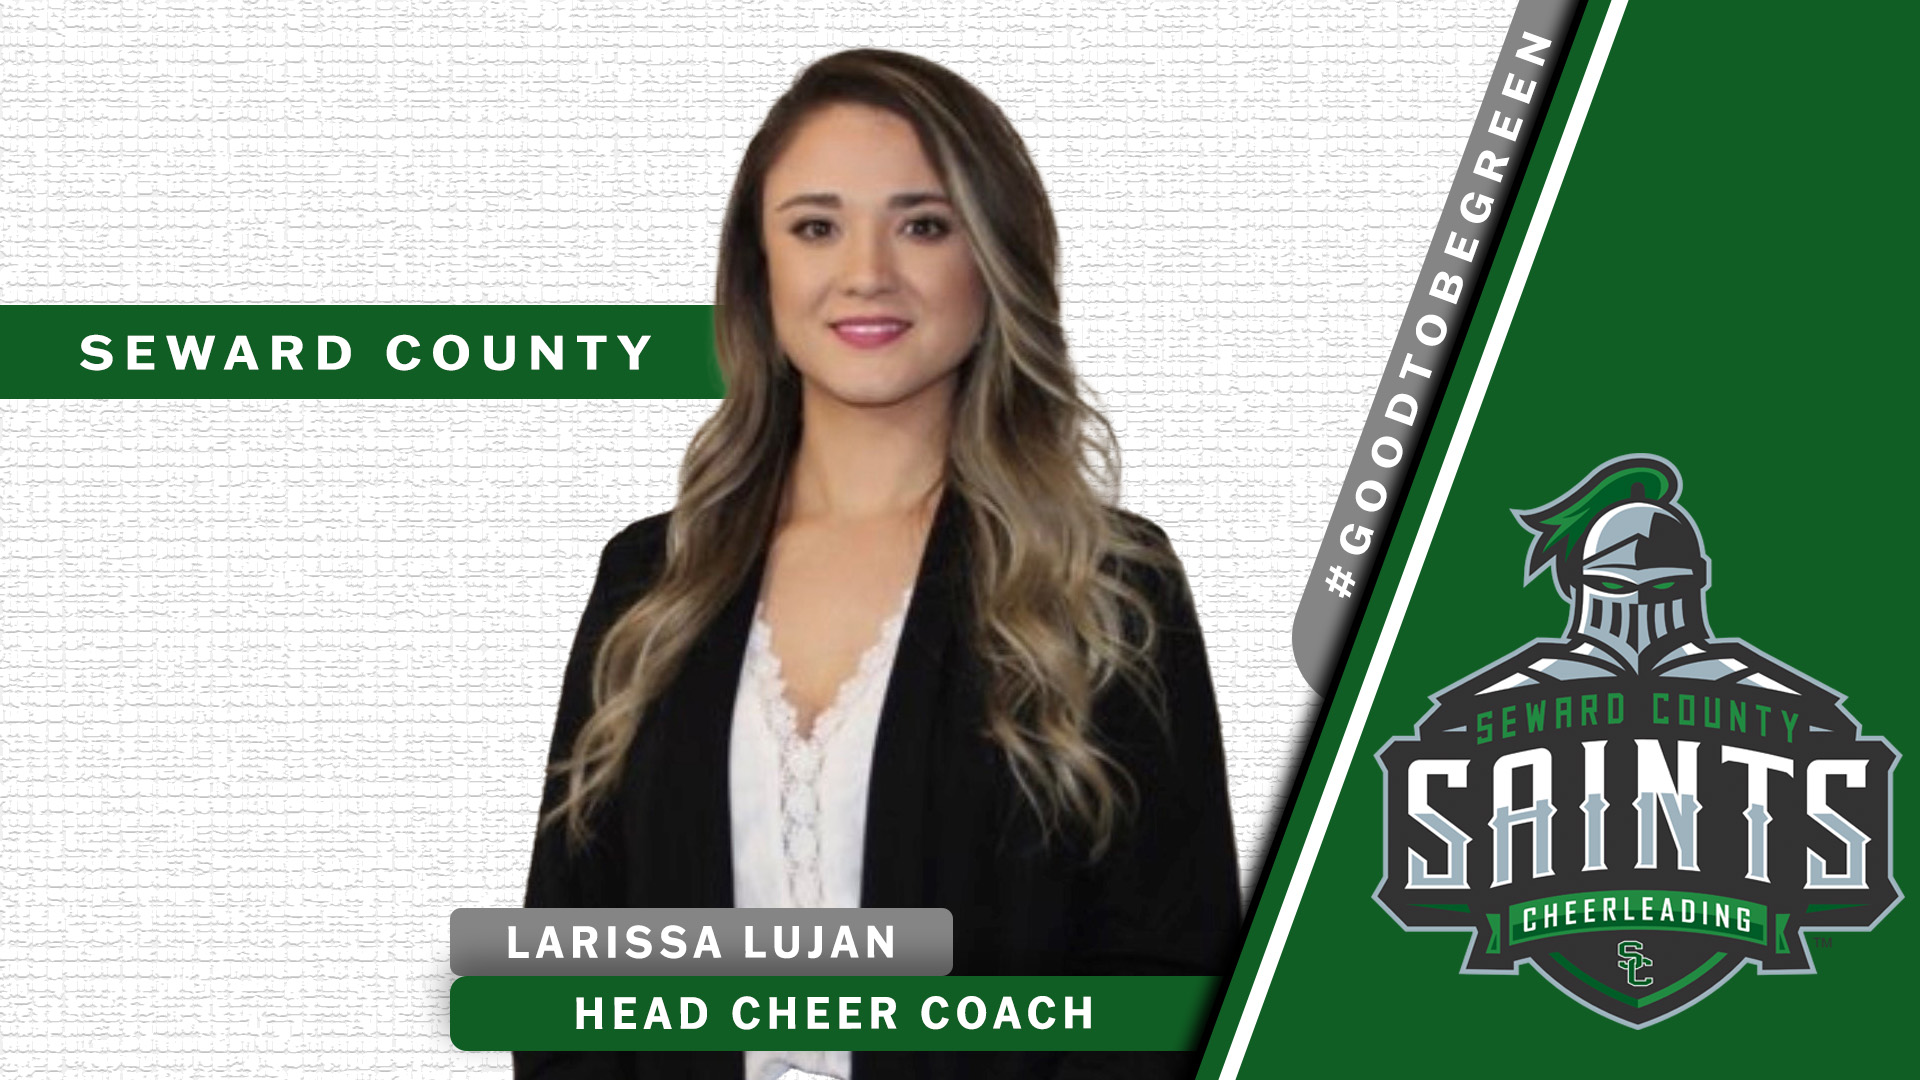 Larissa Lujan named Head Cheer Coach at Seward County